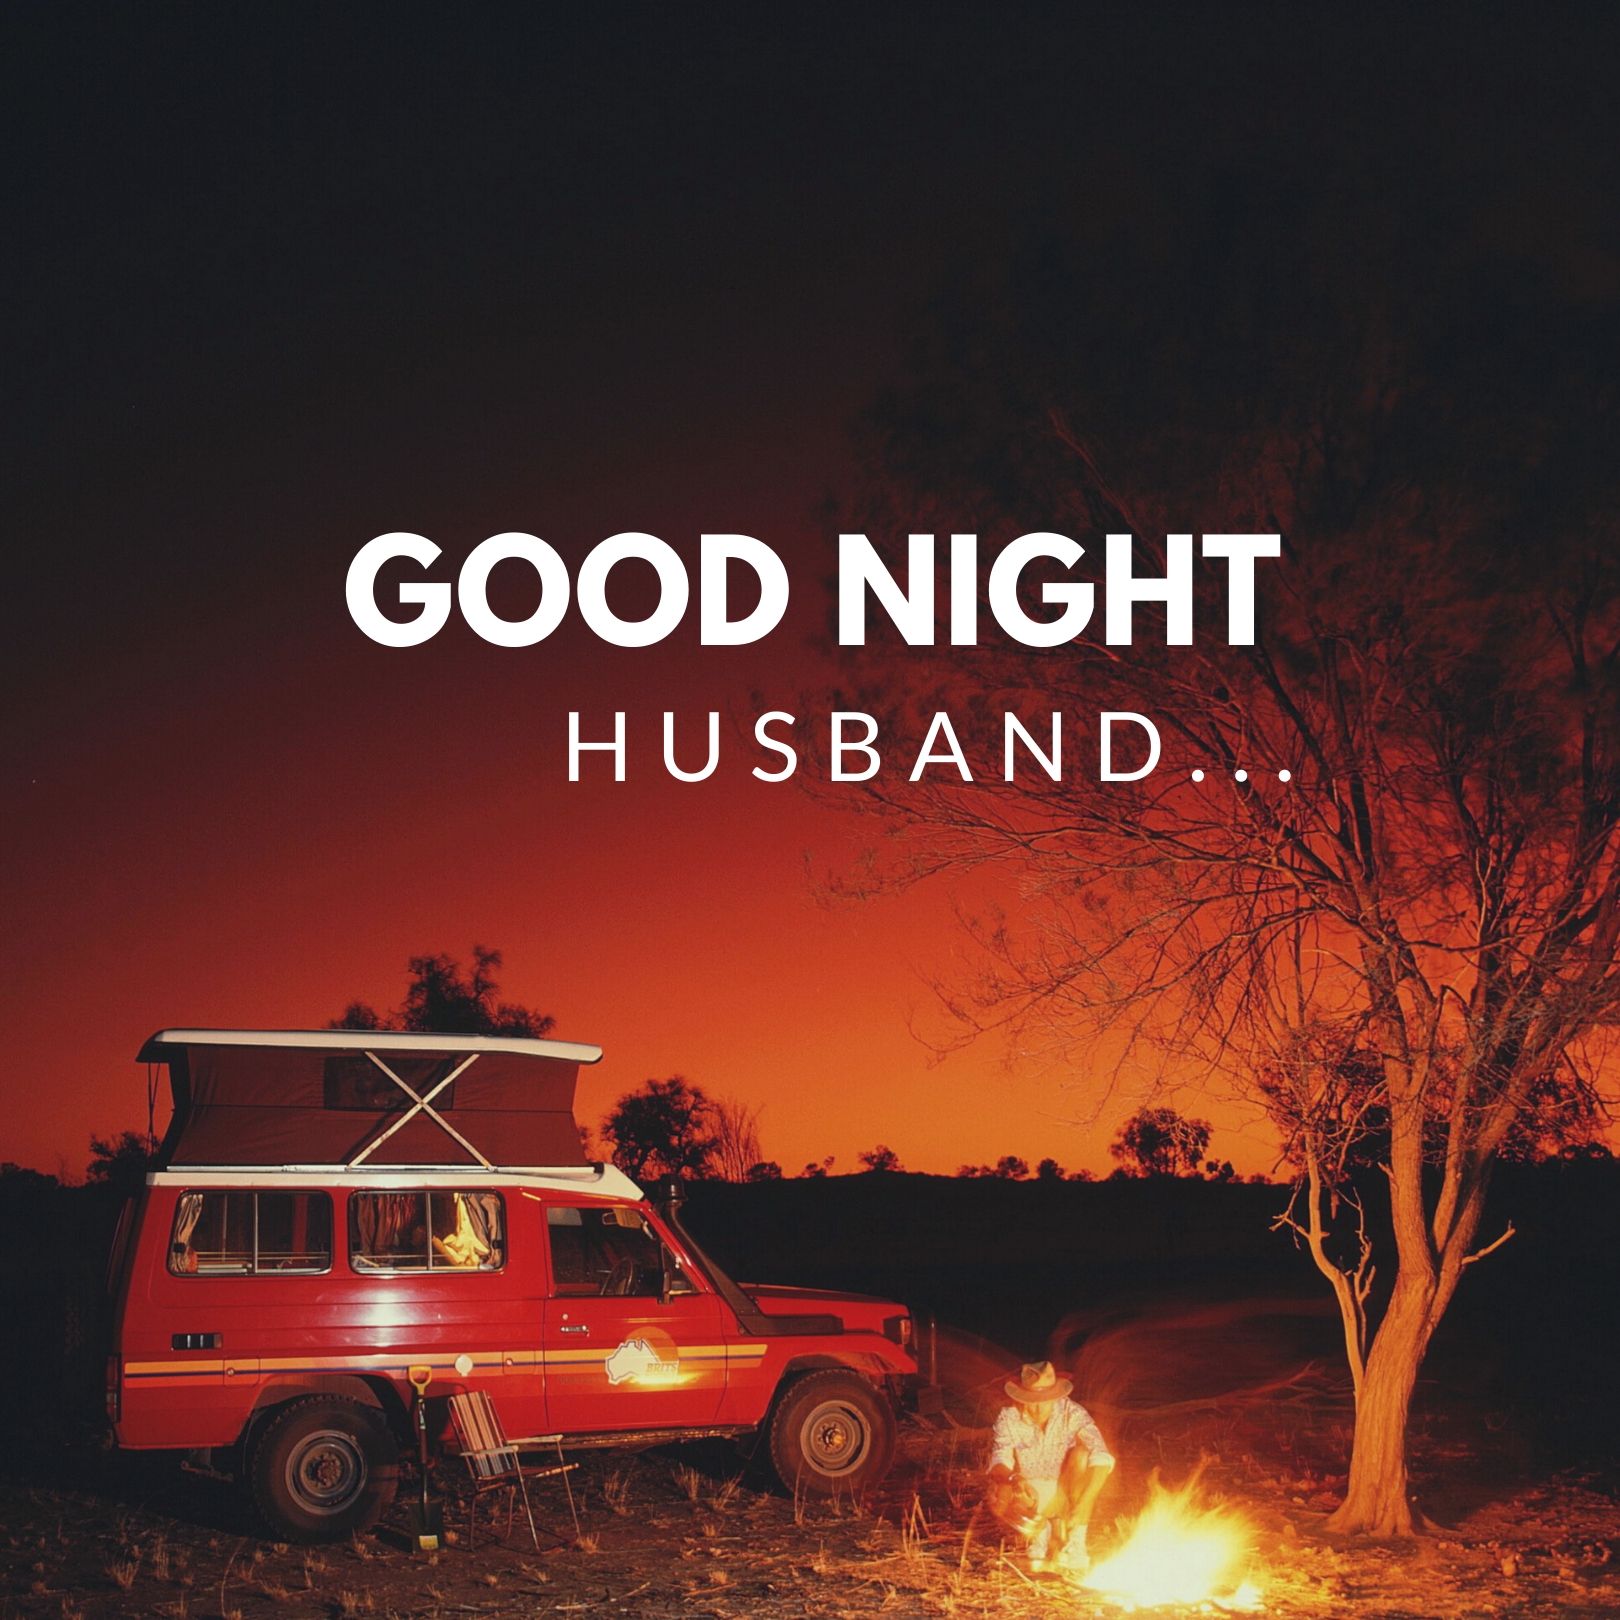 Good Night Husband Image